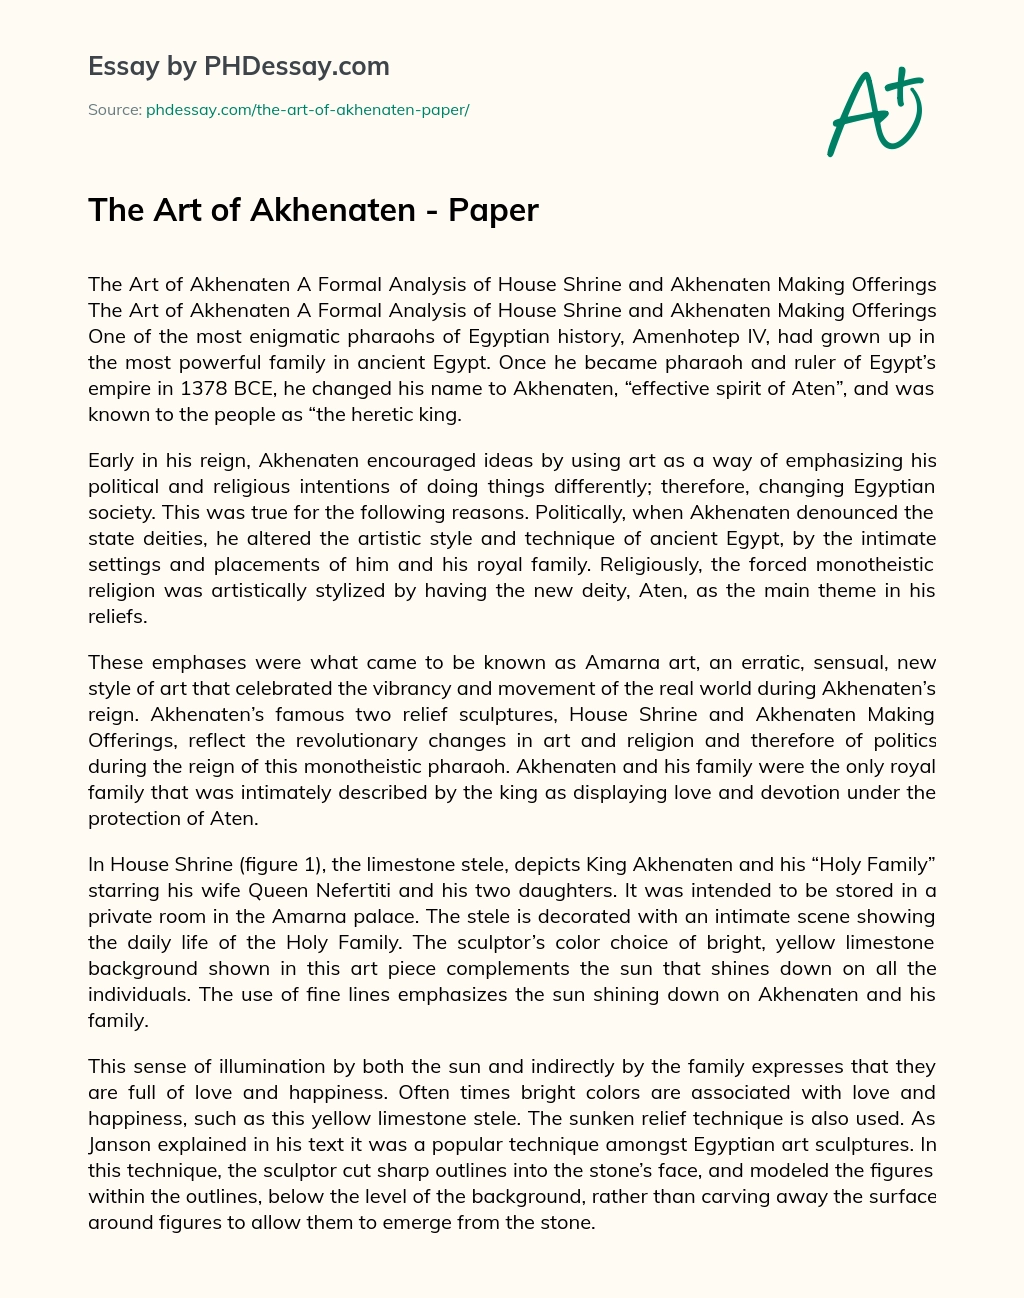 The Art of Akhenaten – Paper essay